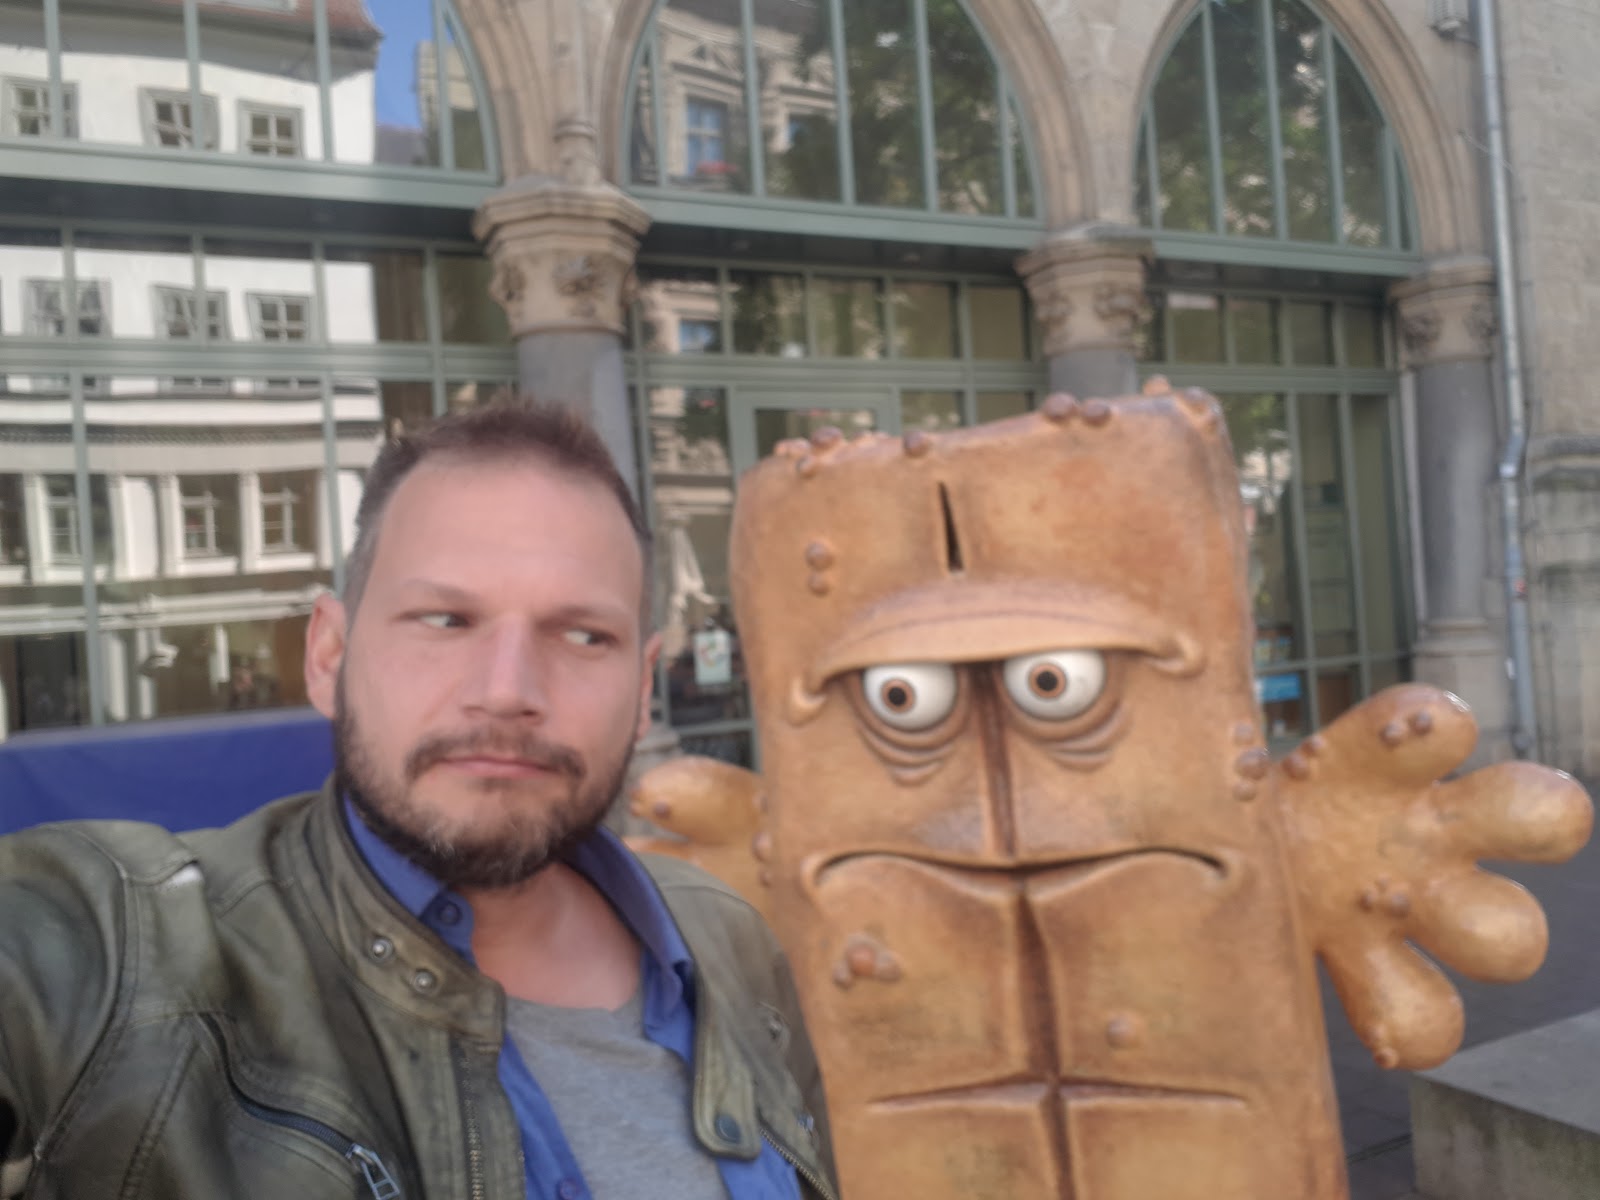 Finding the KiKa characters in Erfurt | The Social Traveler